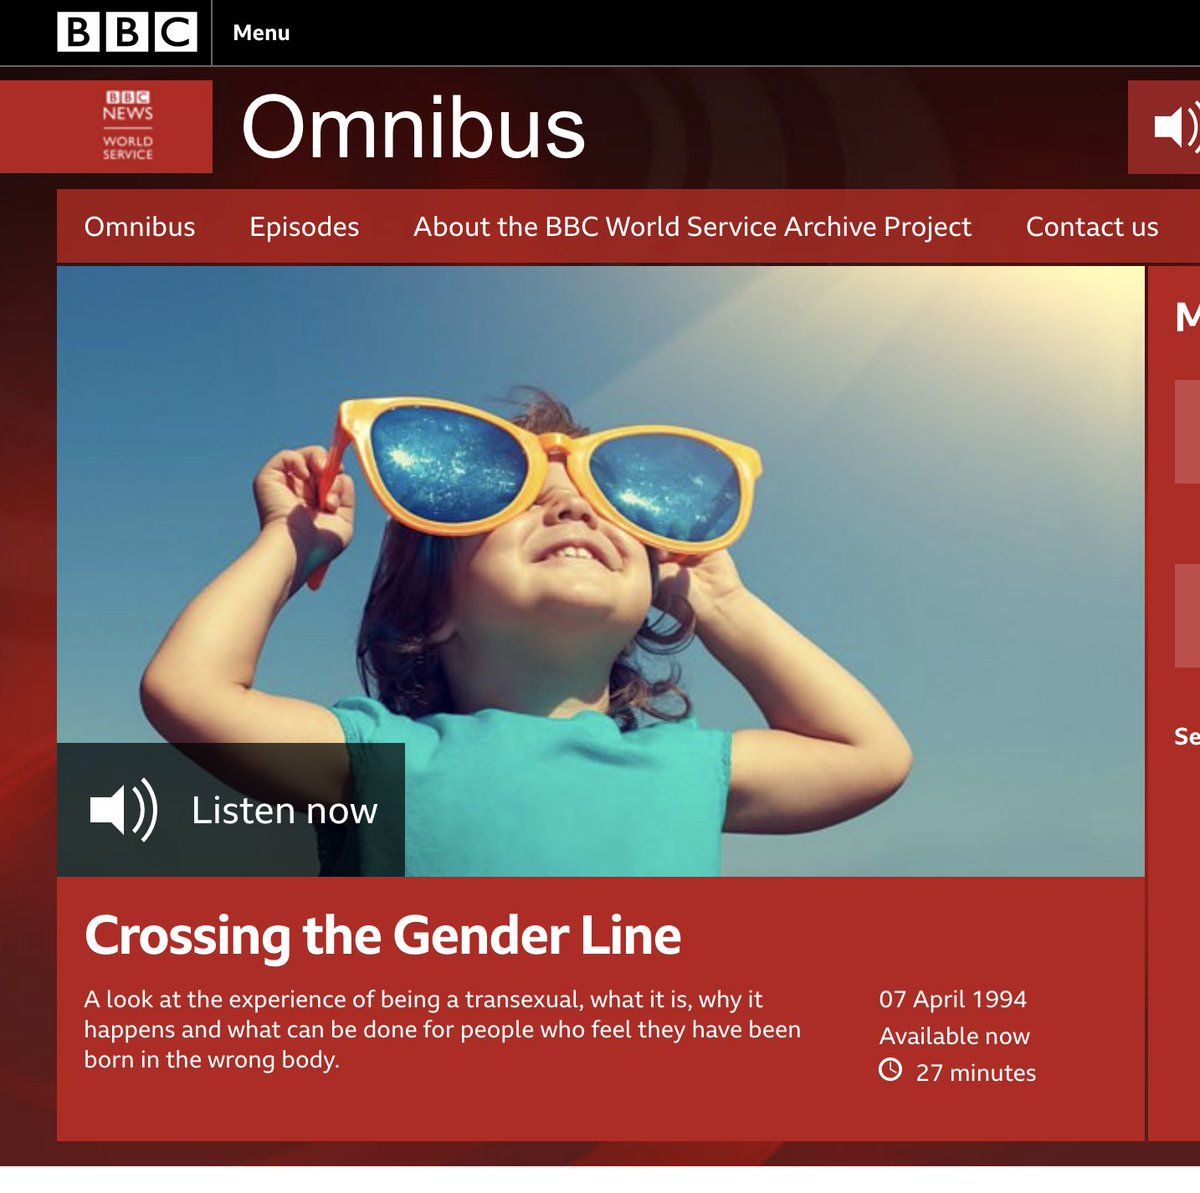 BBC Omnibus, back in 1994 https://www.bbc.co.uk/programmes/p0376ksr